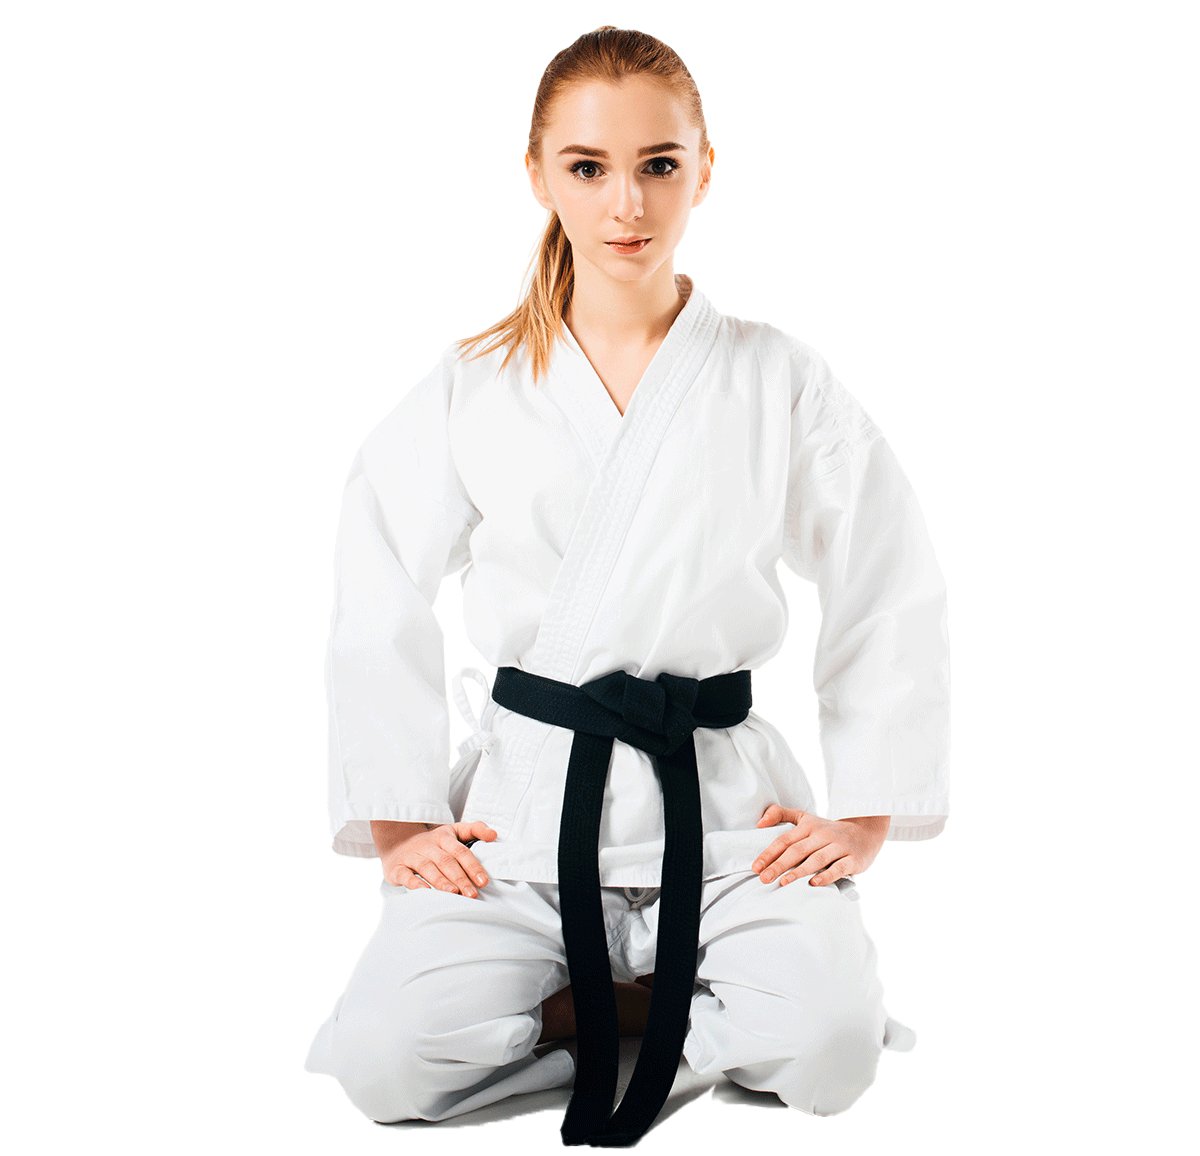 woman seiza karate